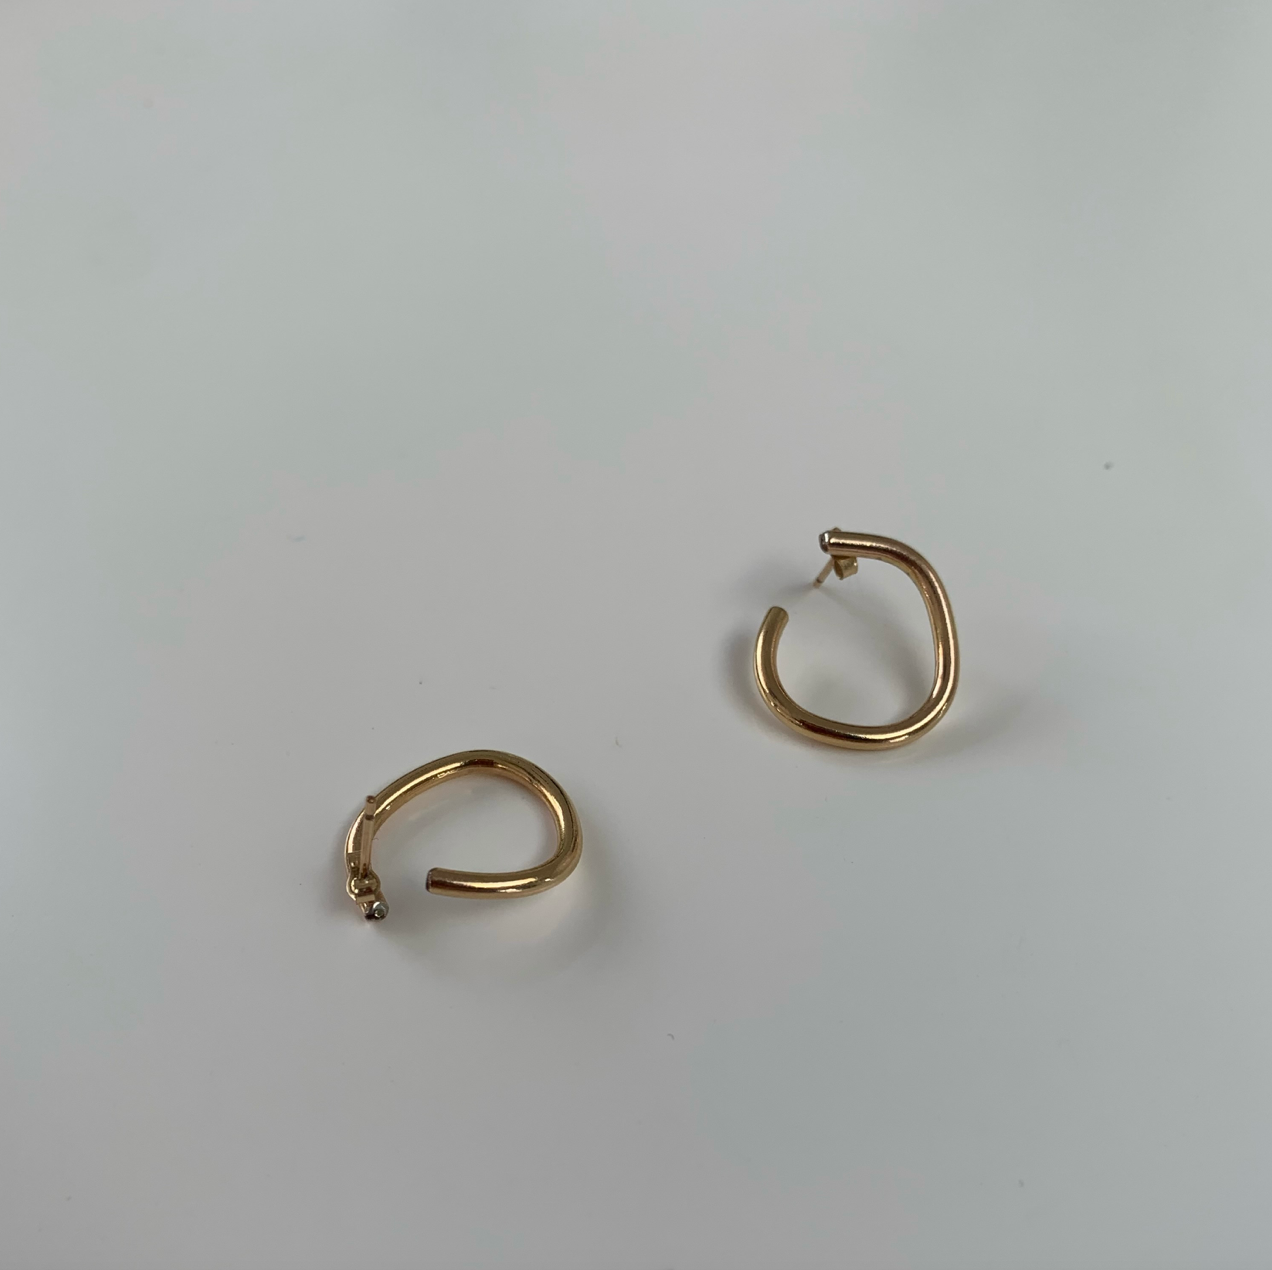 Handmade gold irregular hoop earrings.